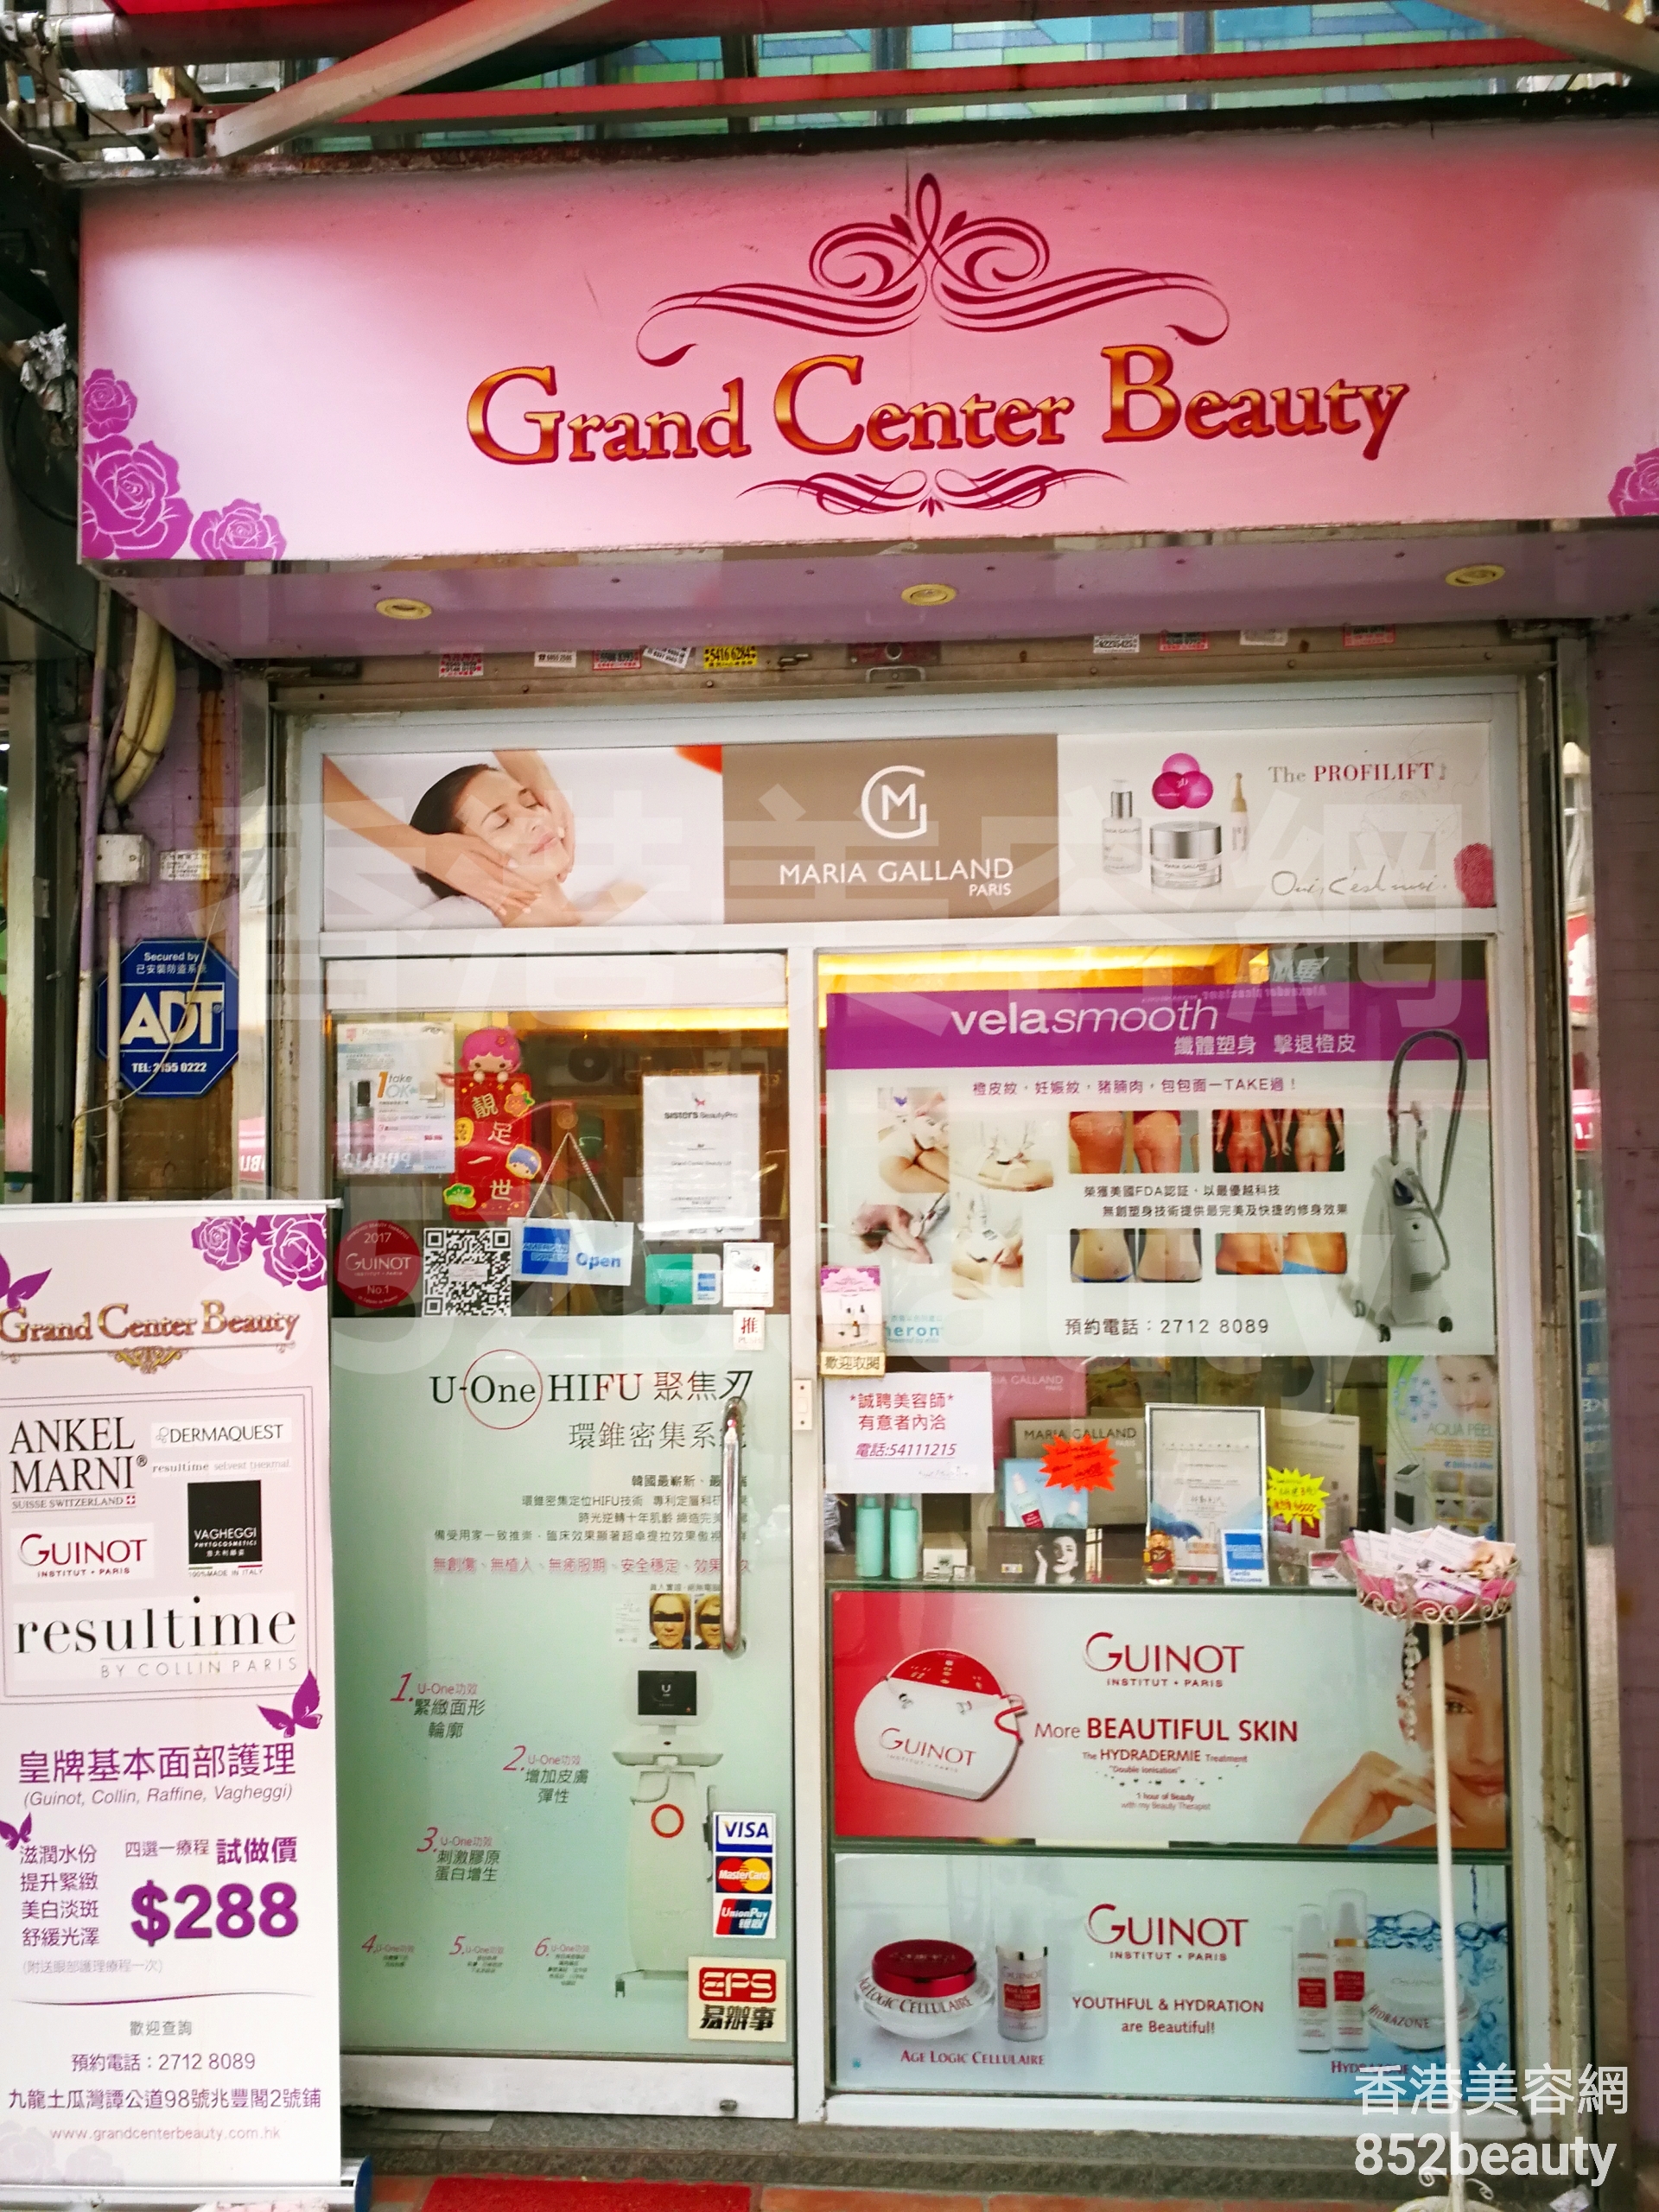 香港美容網 Hong Kong Beauty Salon 美容院 / 美容師: Grand Center Beauty